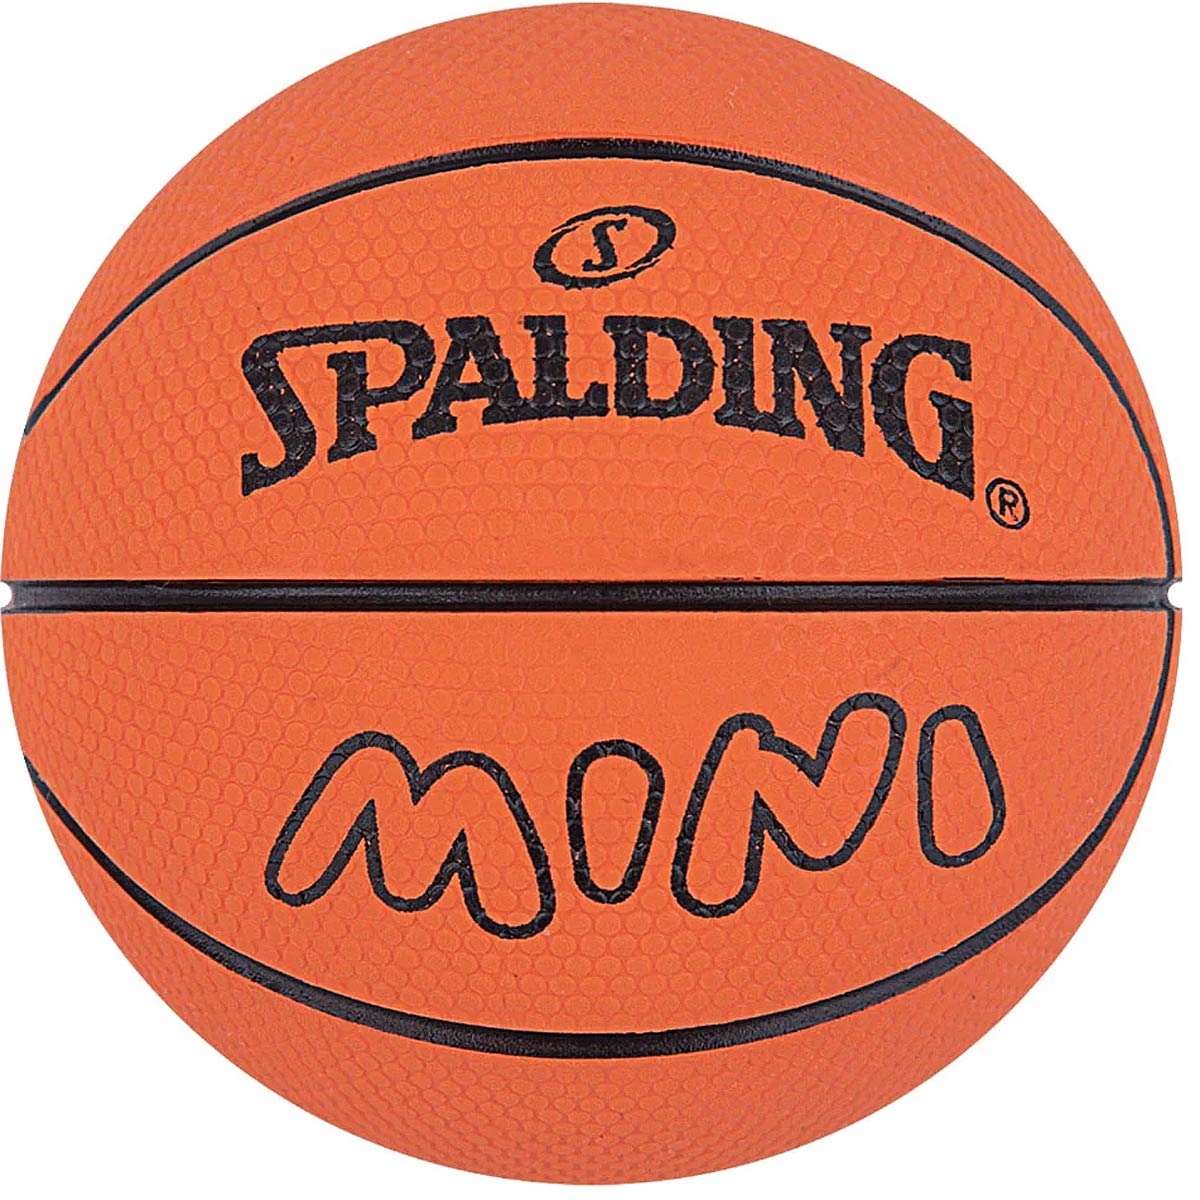 Spalding Spaldeens Basketball, Orange